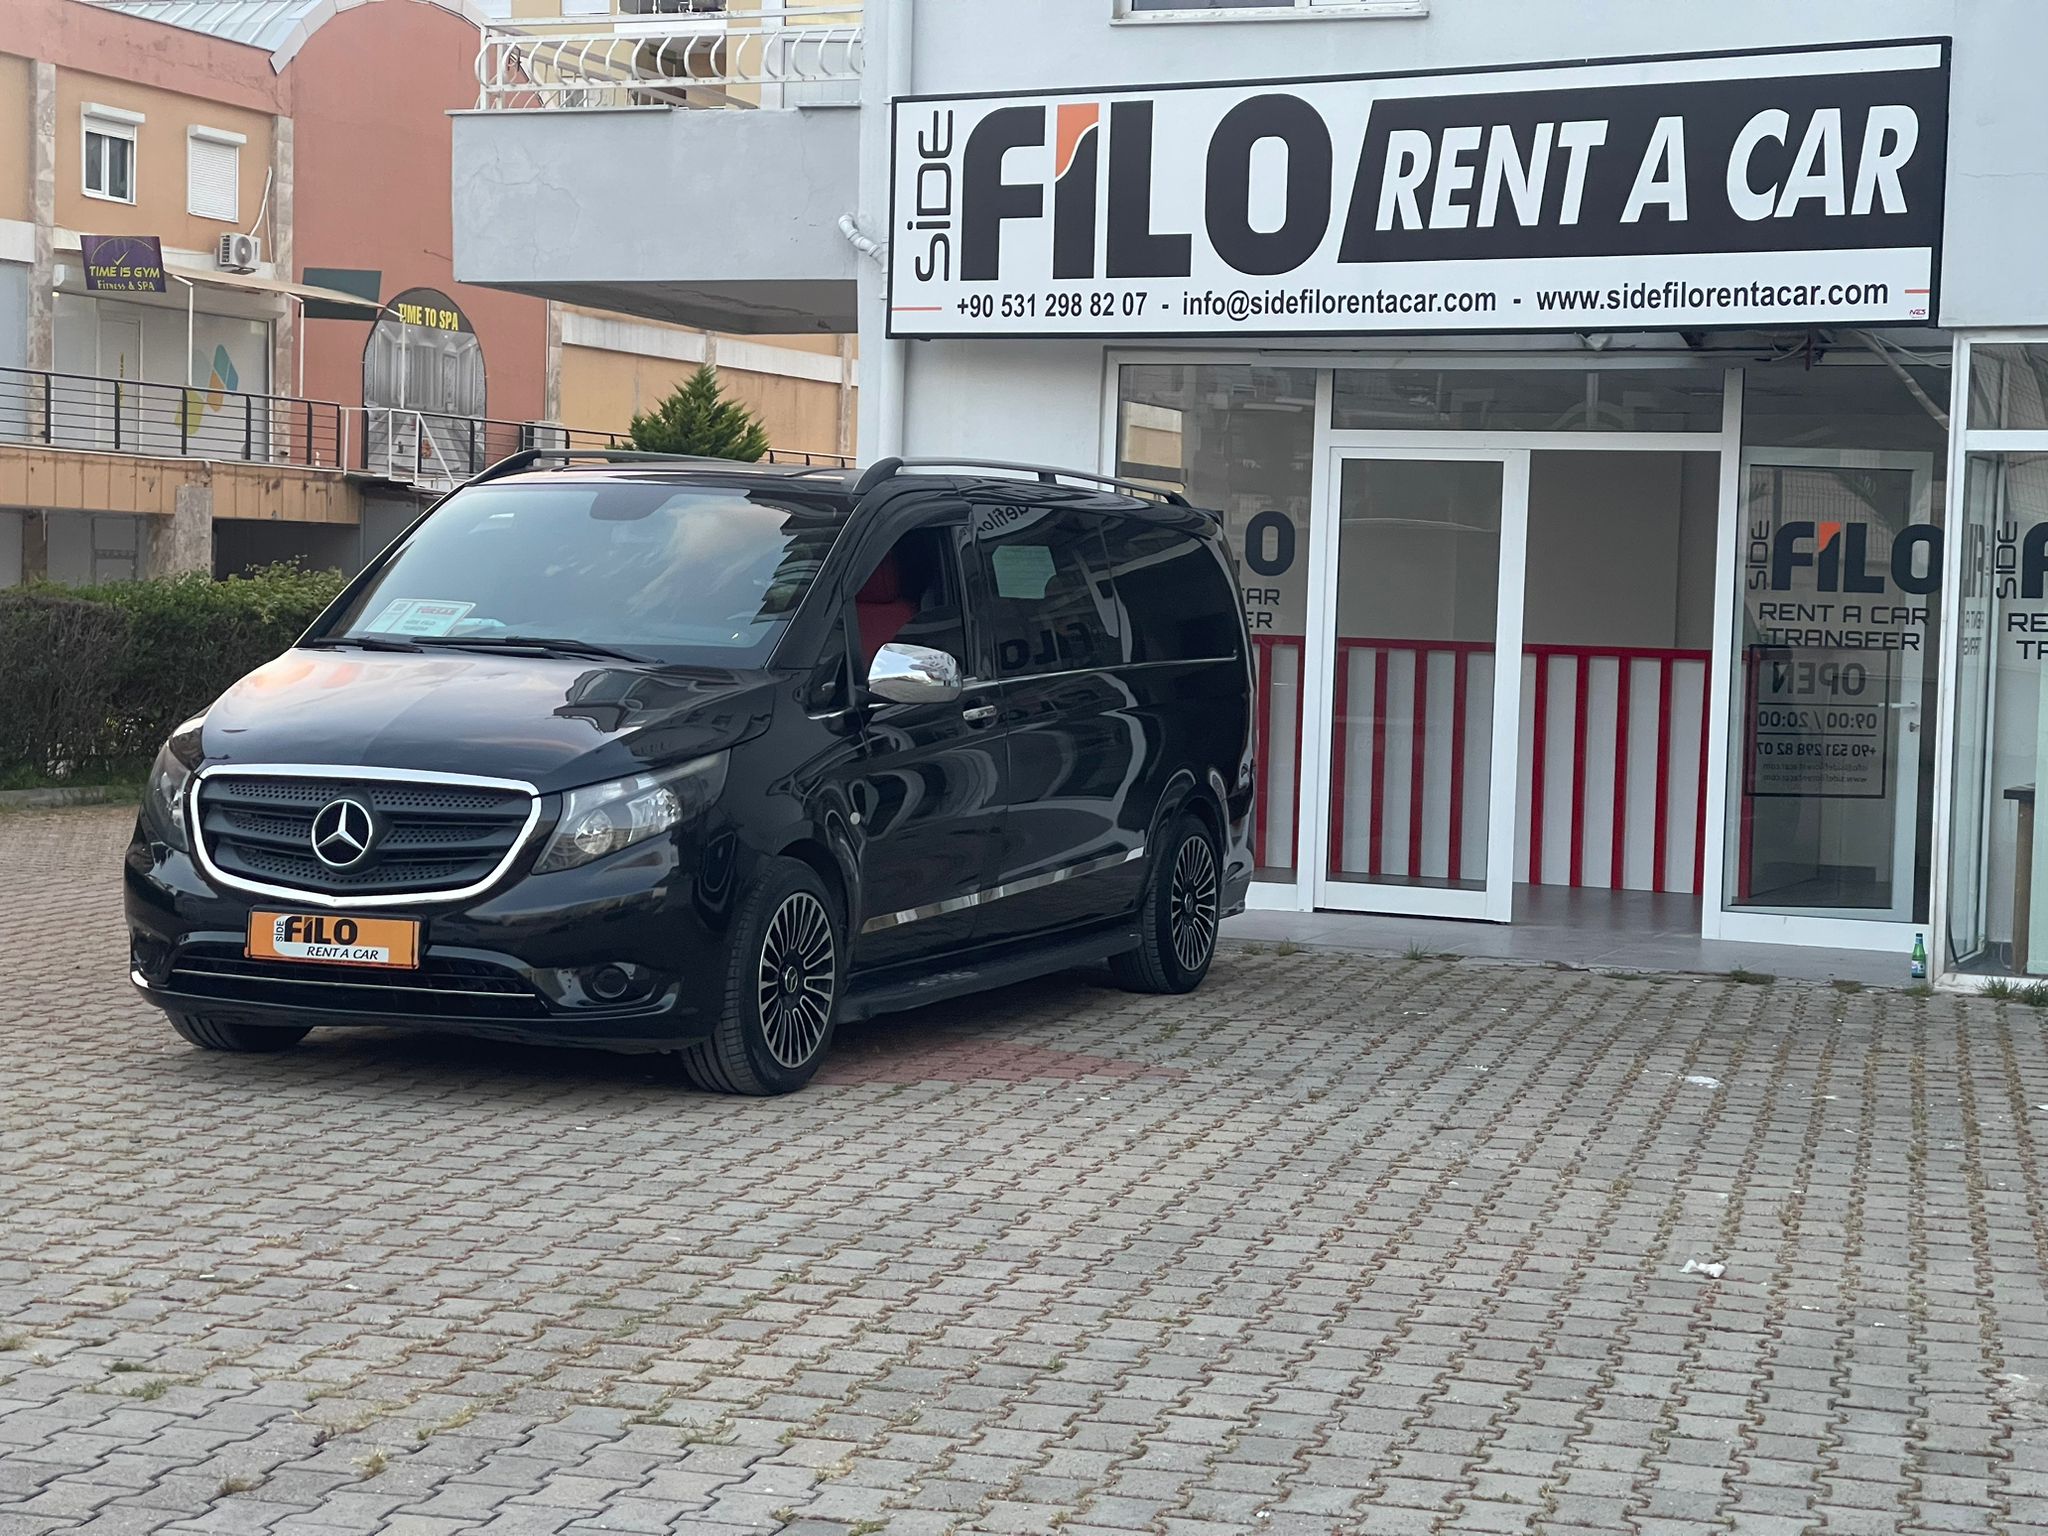 Minibus Rental in Antalya: Belek Rent A Car